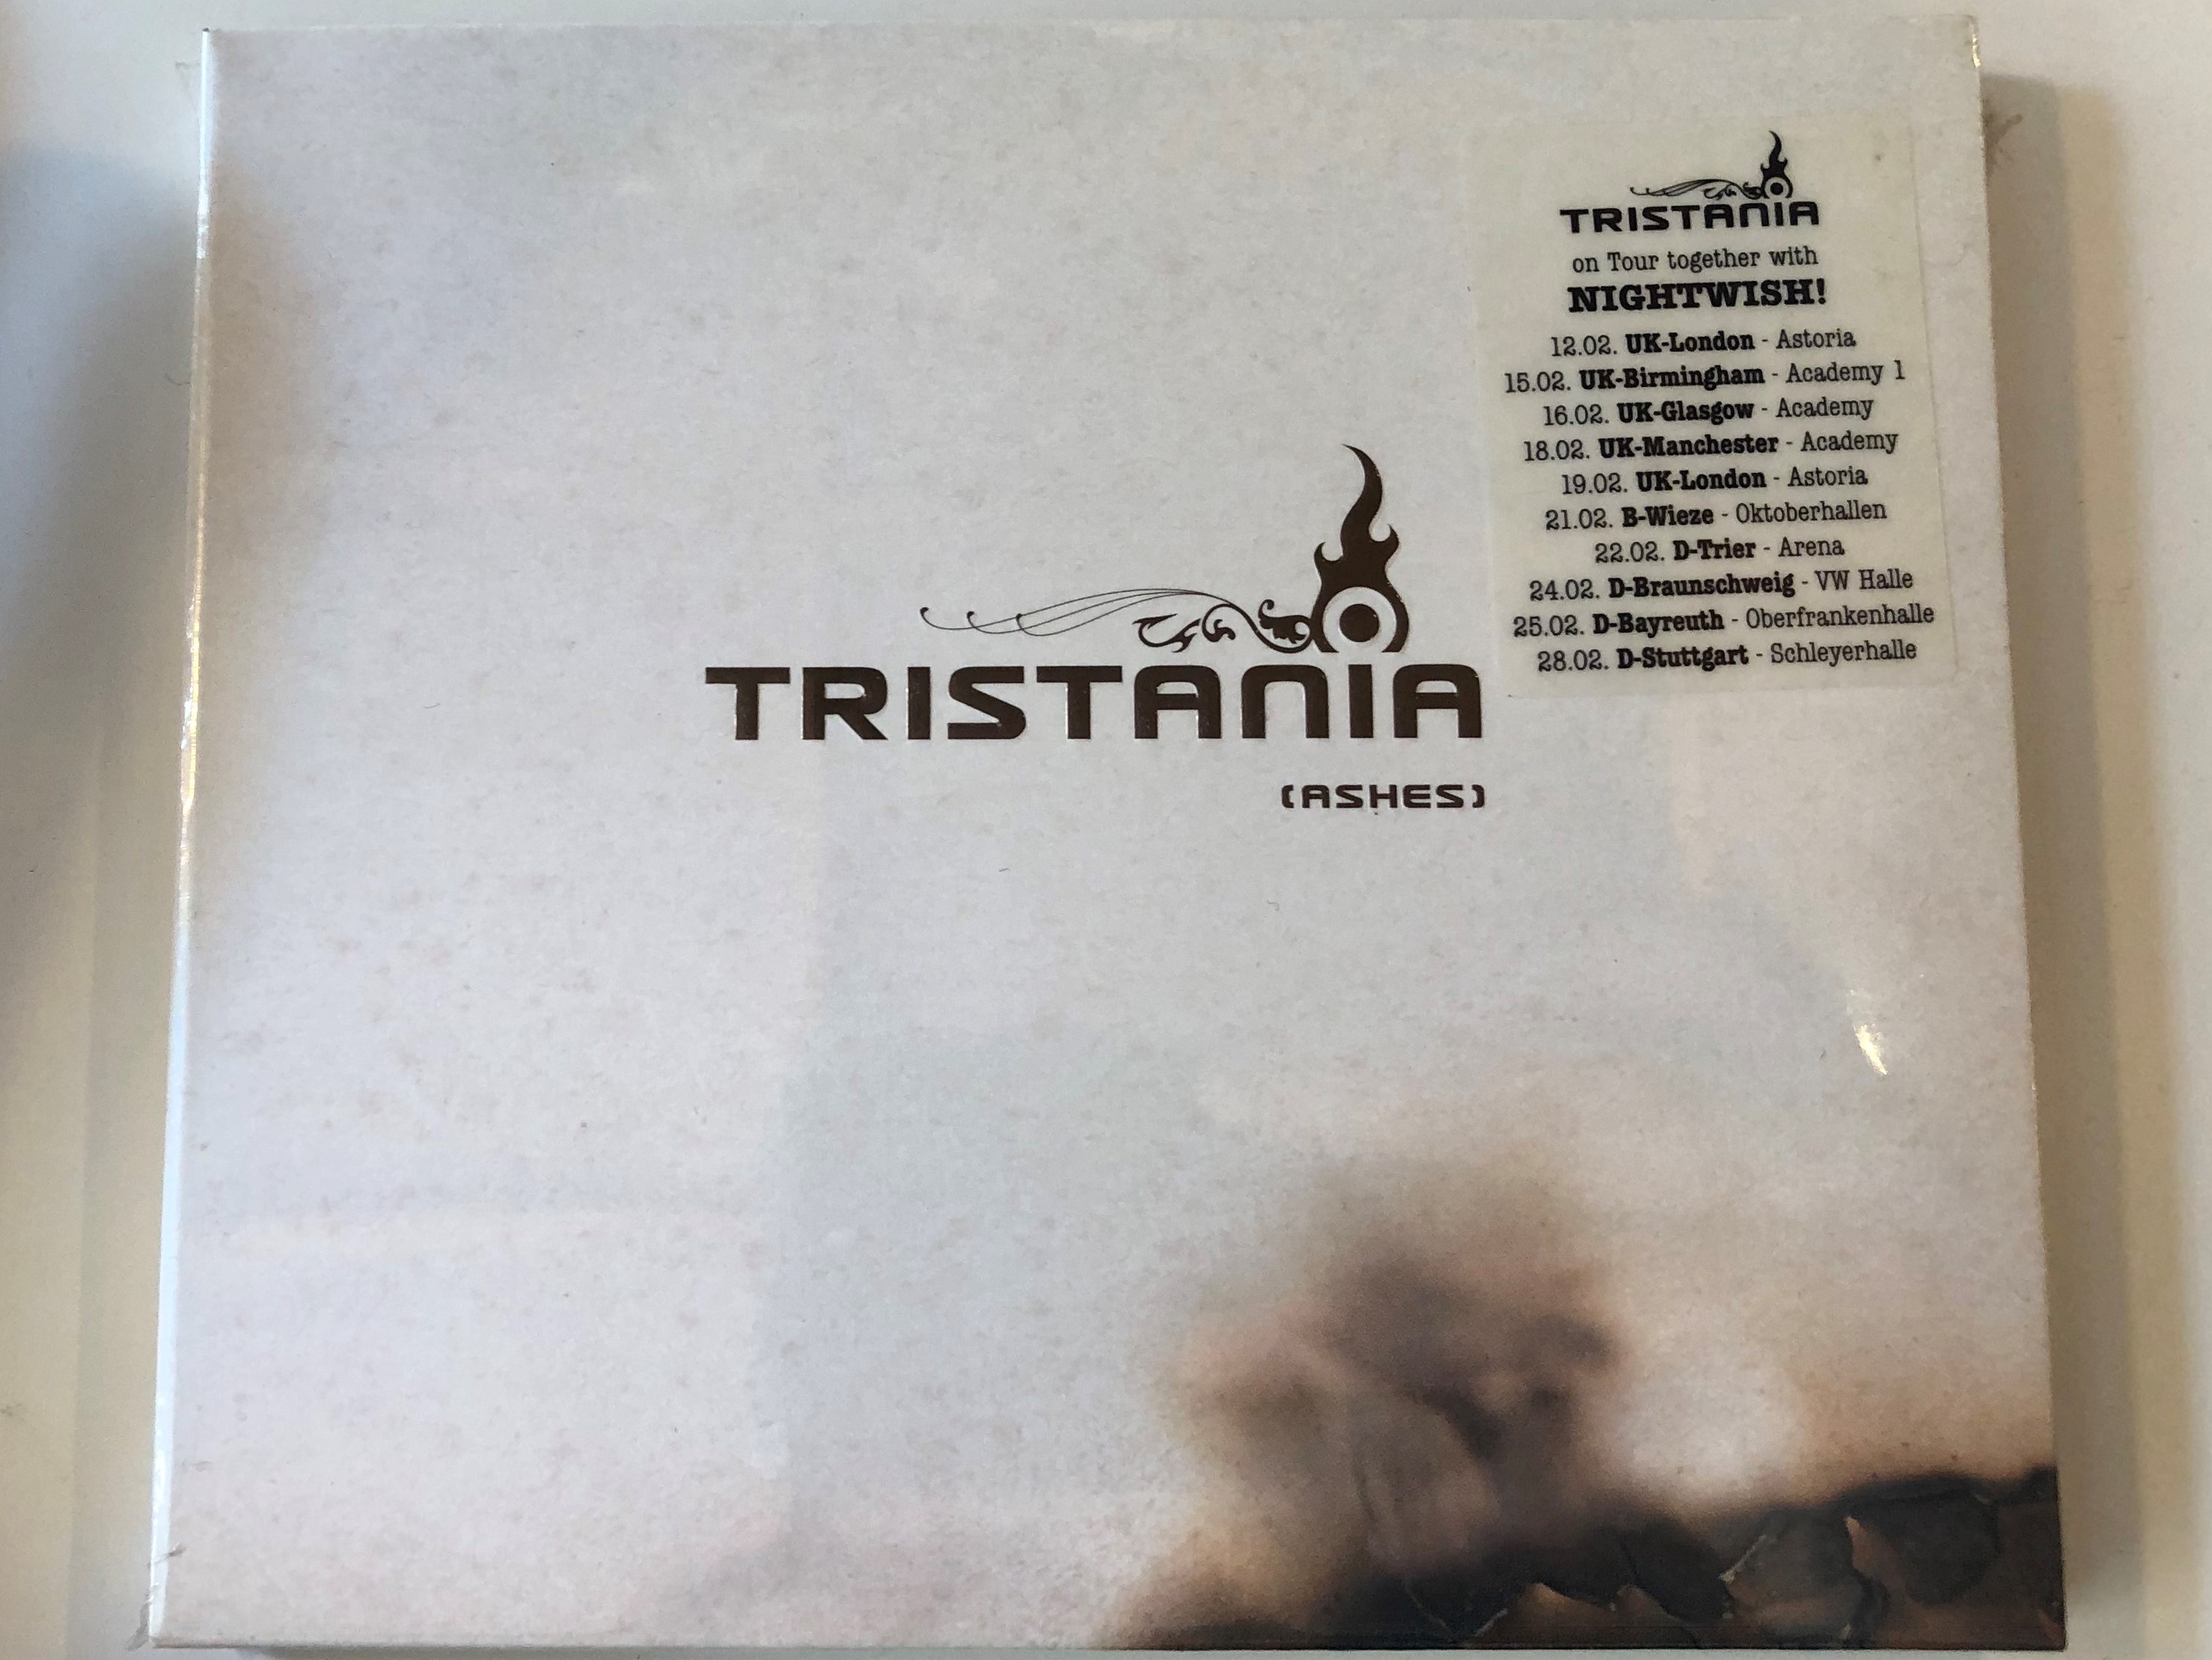 tristania-ashes-steamhammer-audio-cd-2005-spv-087-99200-cd-1-.jpg